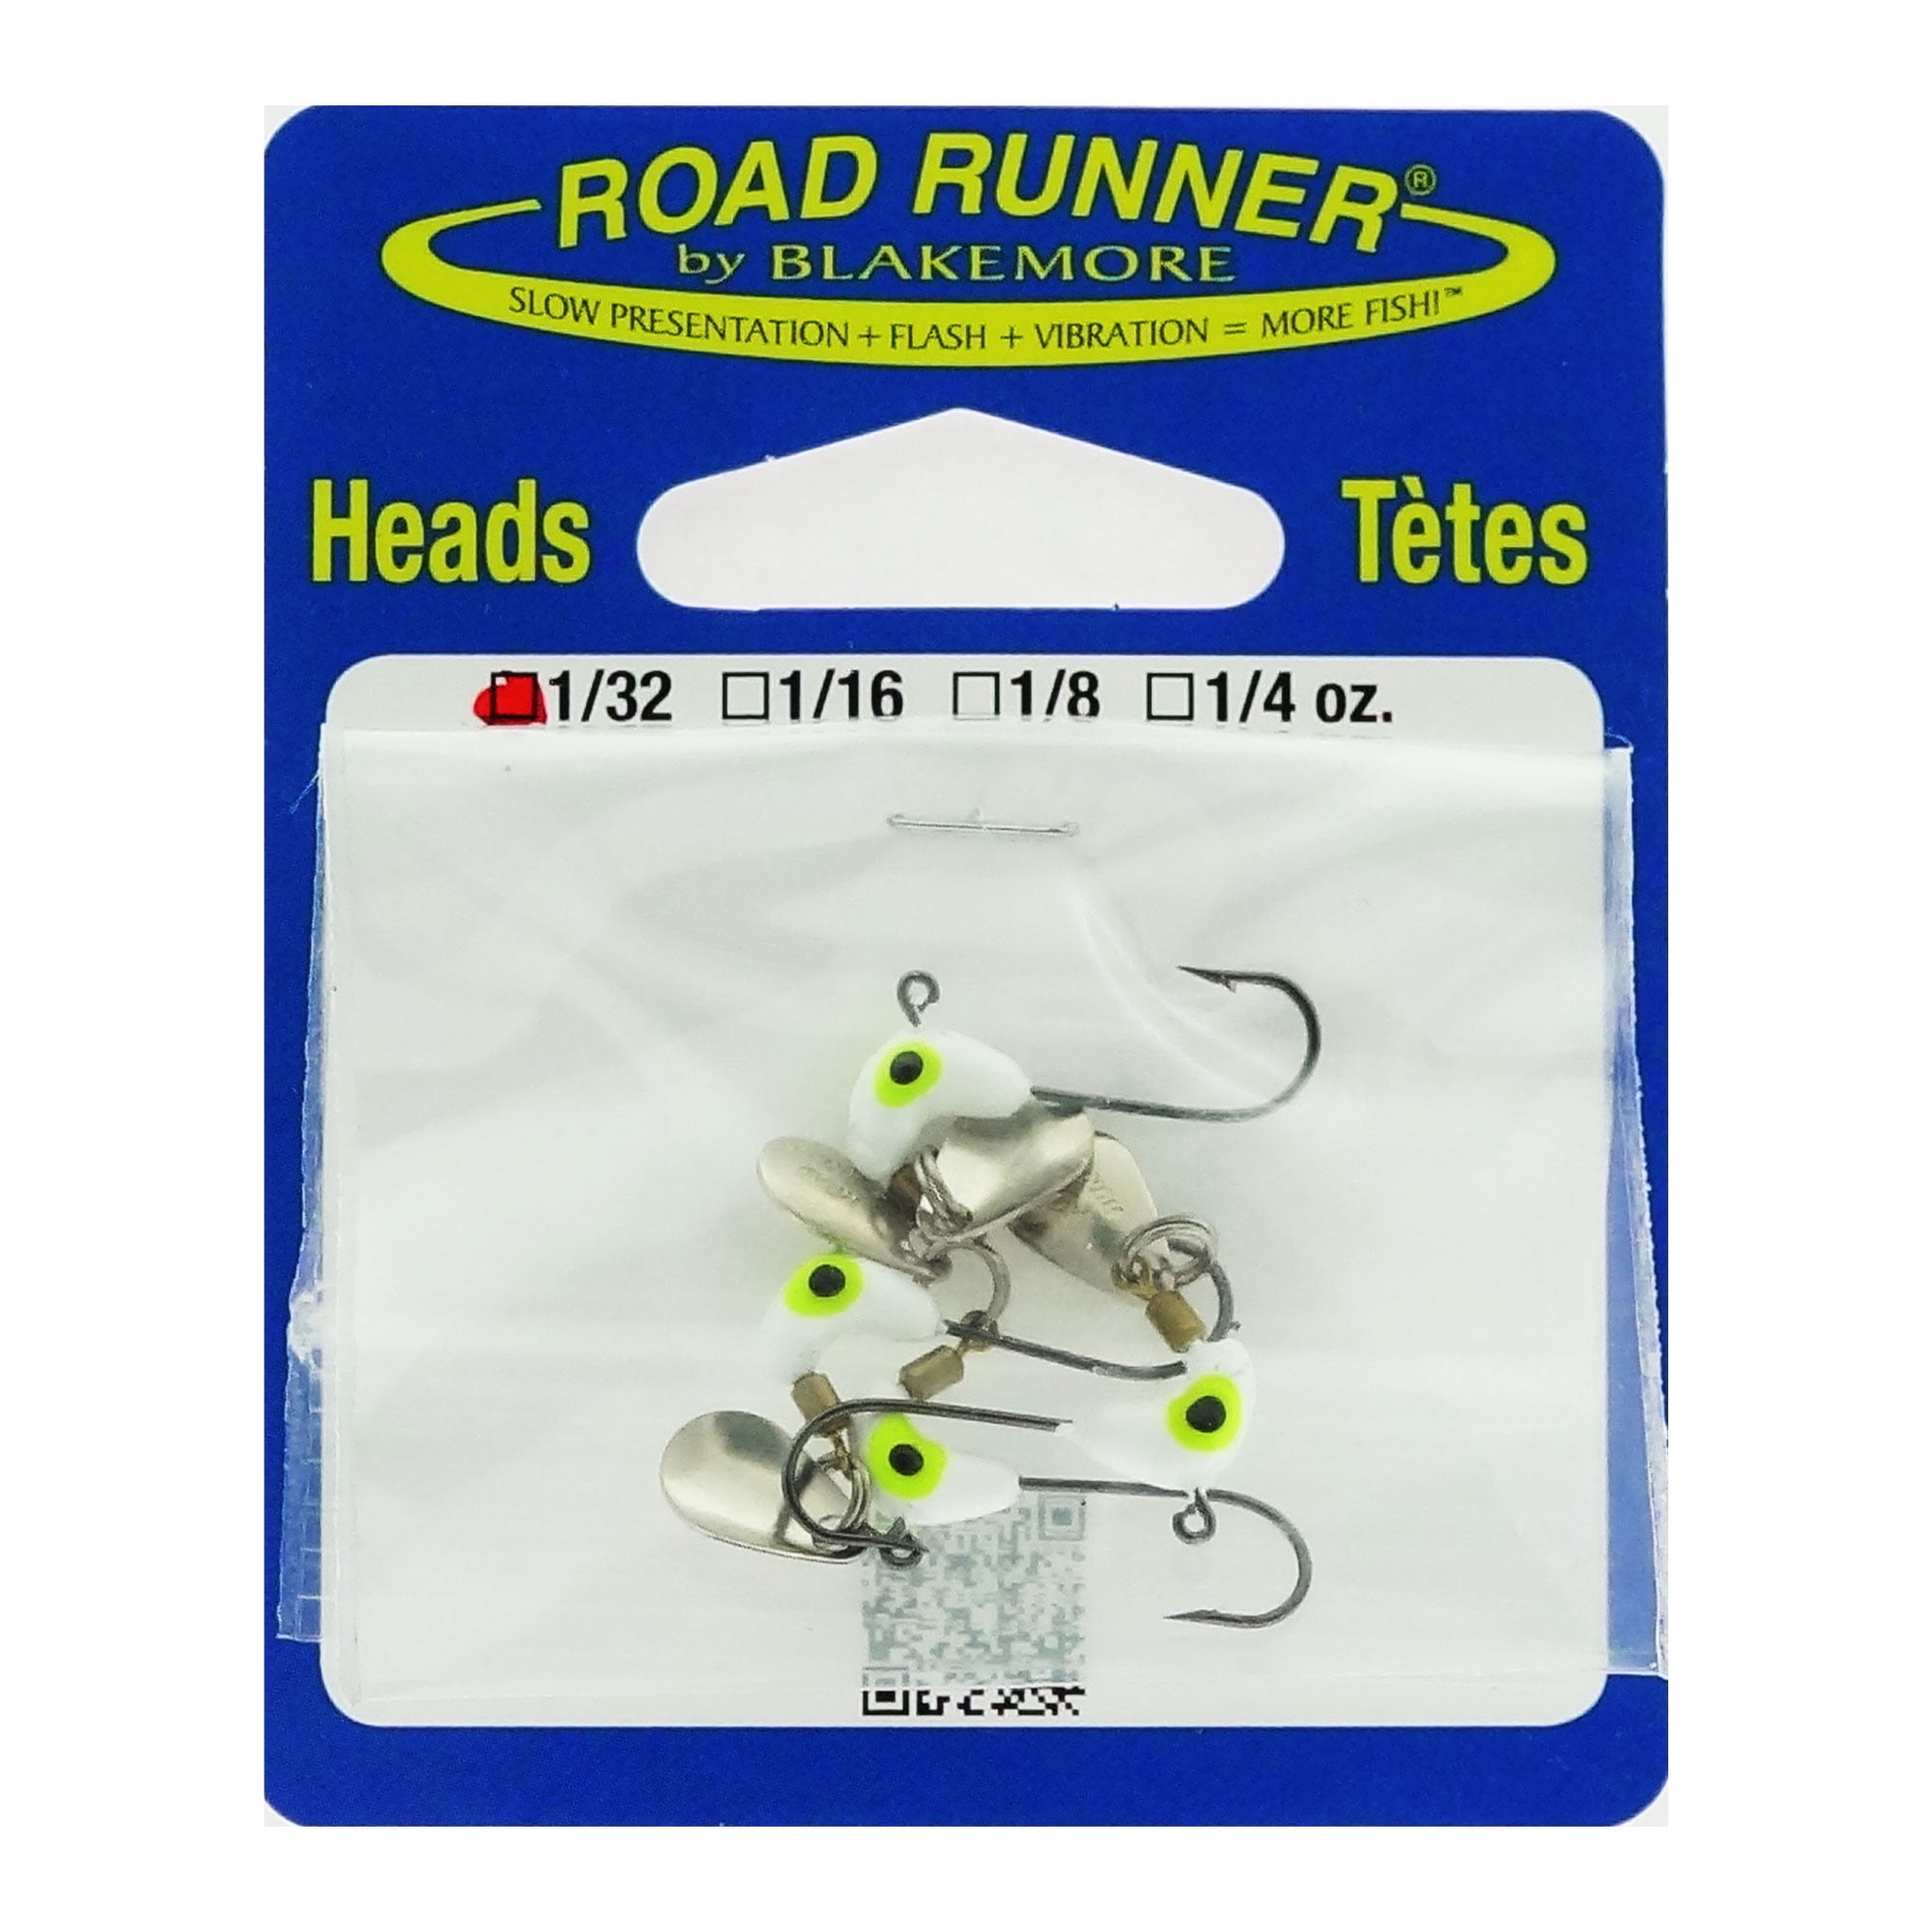 Road Runner Bleeding Bait 1/8oz. - White Underspin Fishing jig creates  flash and vibration. 